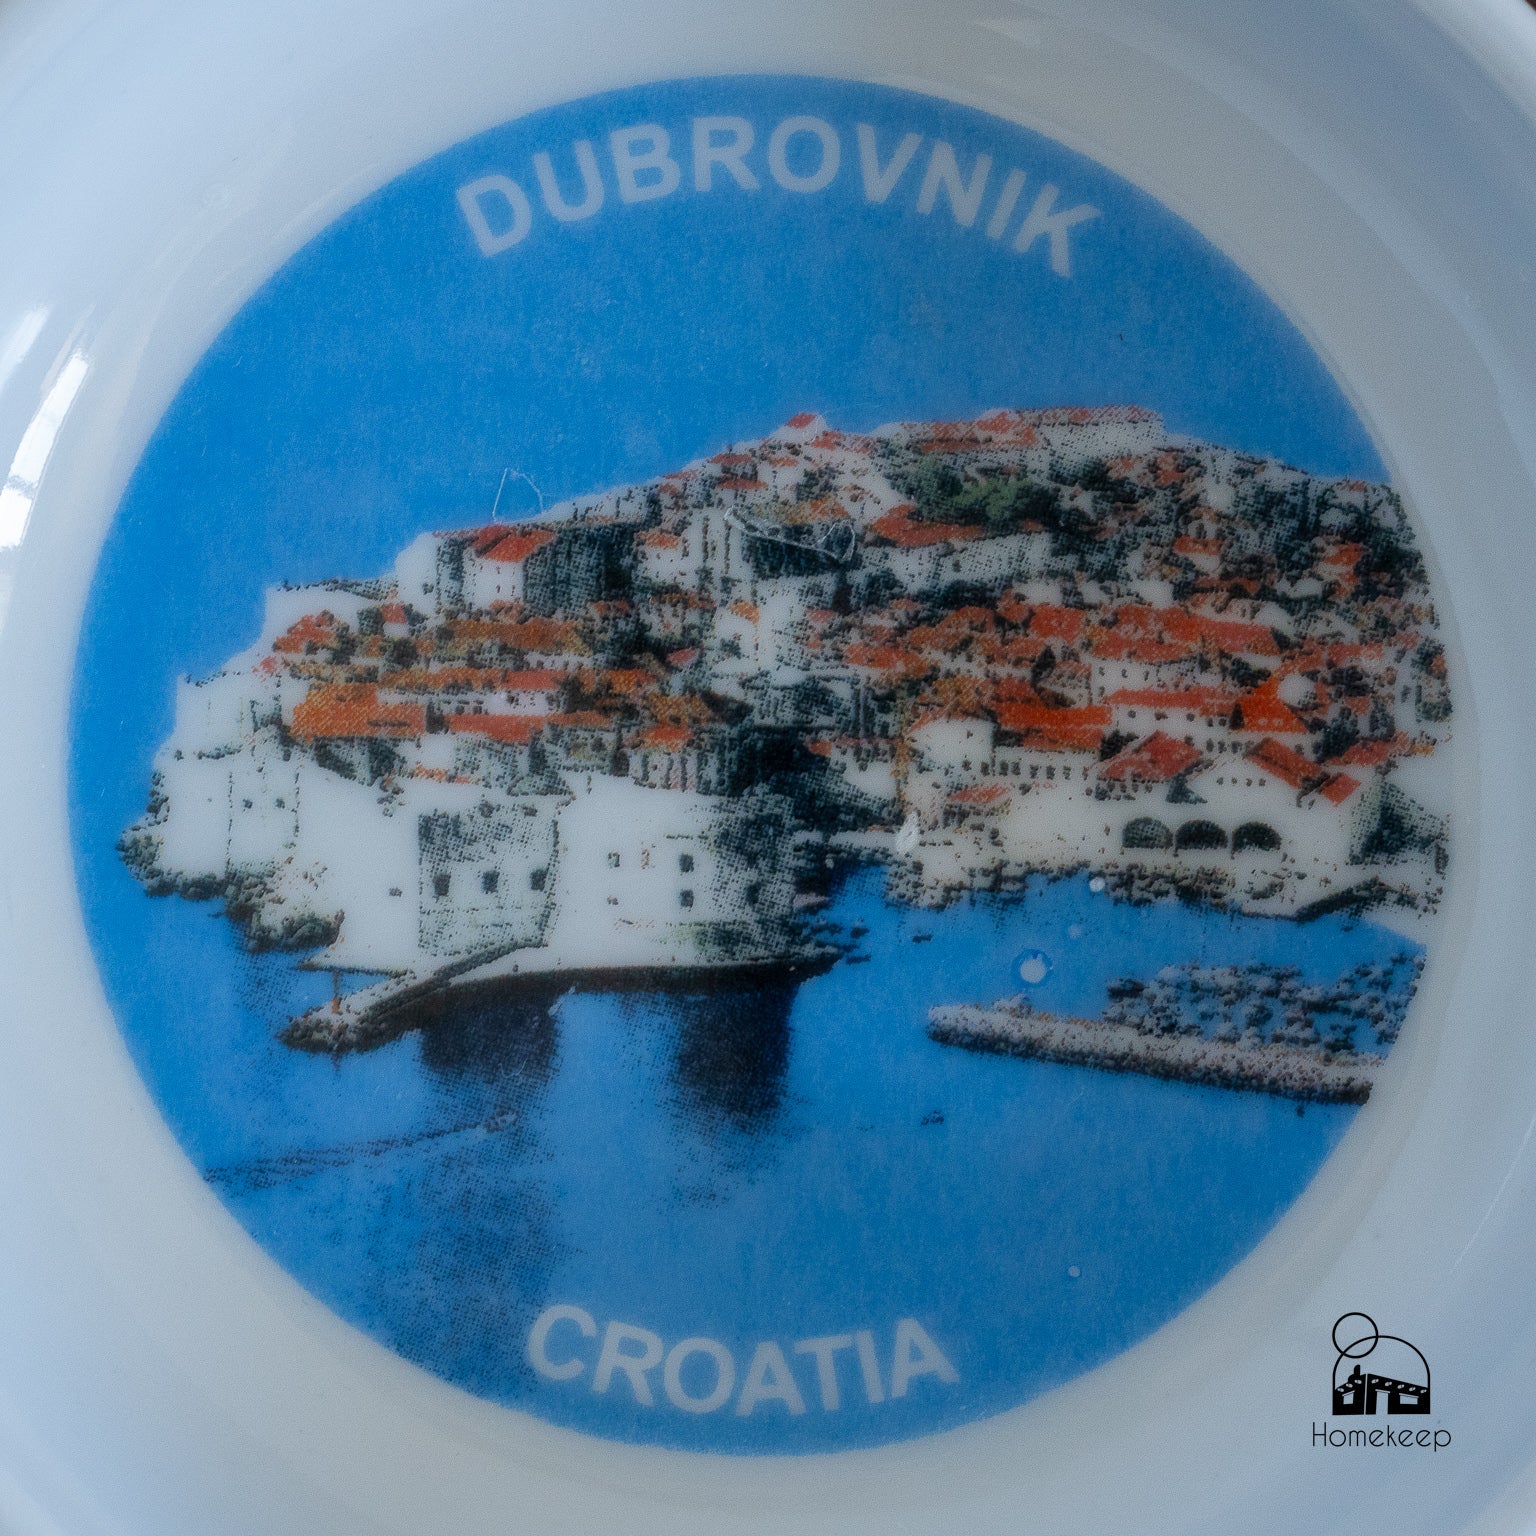 Dubrovnik Croatia Ceramic Ashtray - Homekeep Market